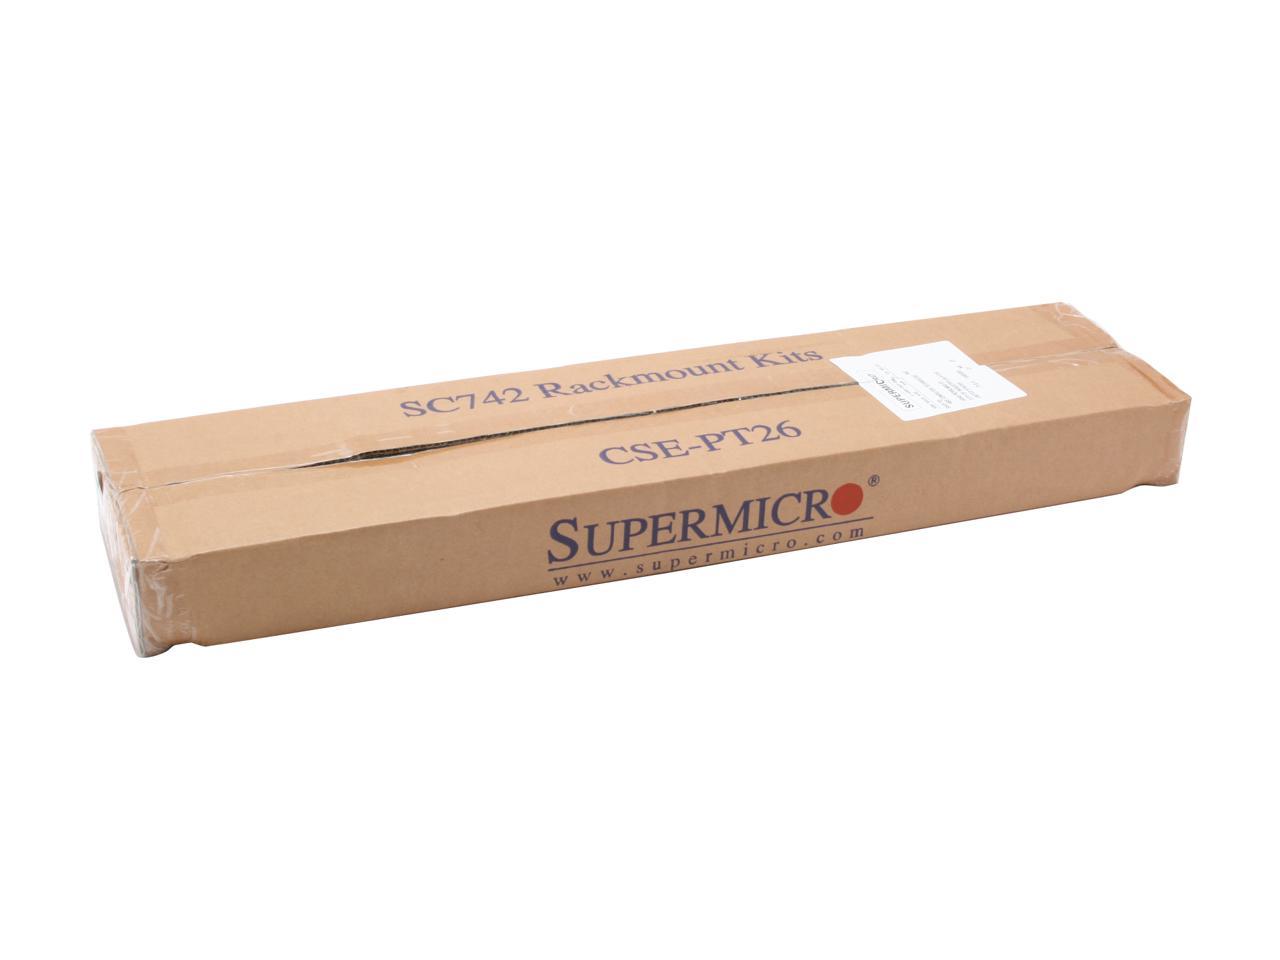 Supermicro CSE-PT26LB 4U Rackmounting Rails & kit 